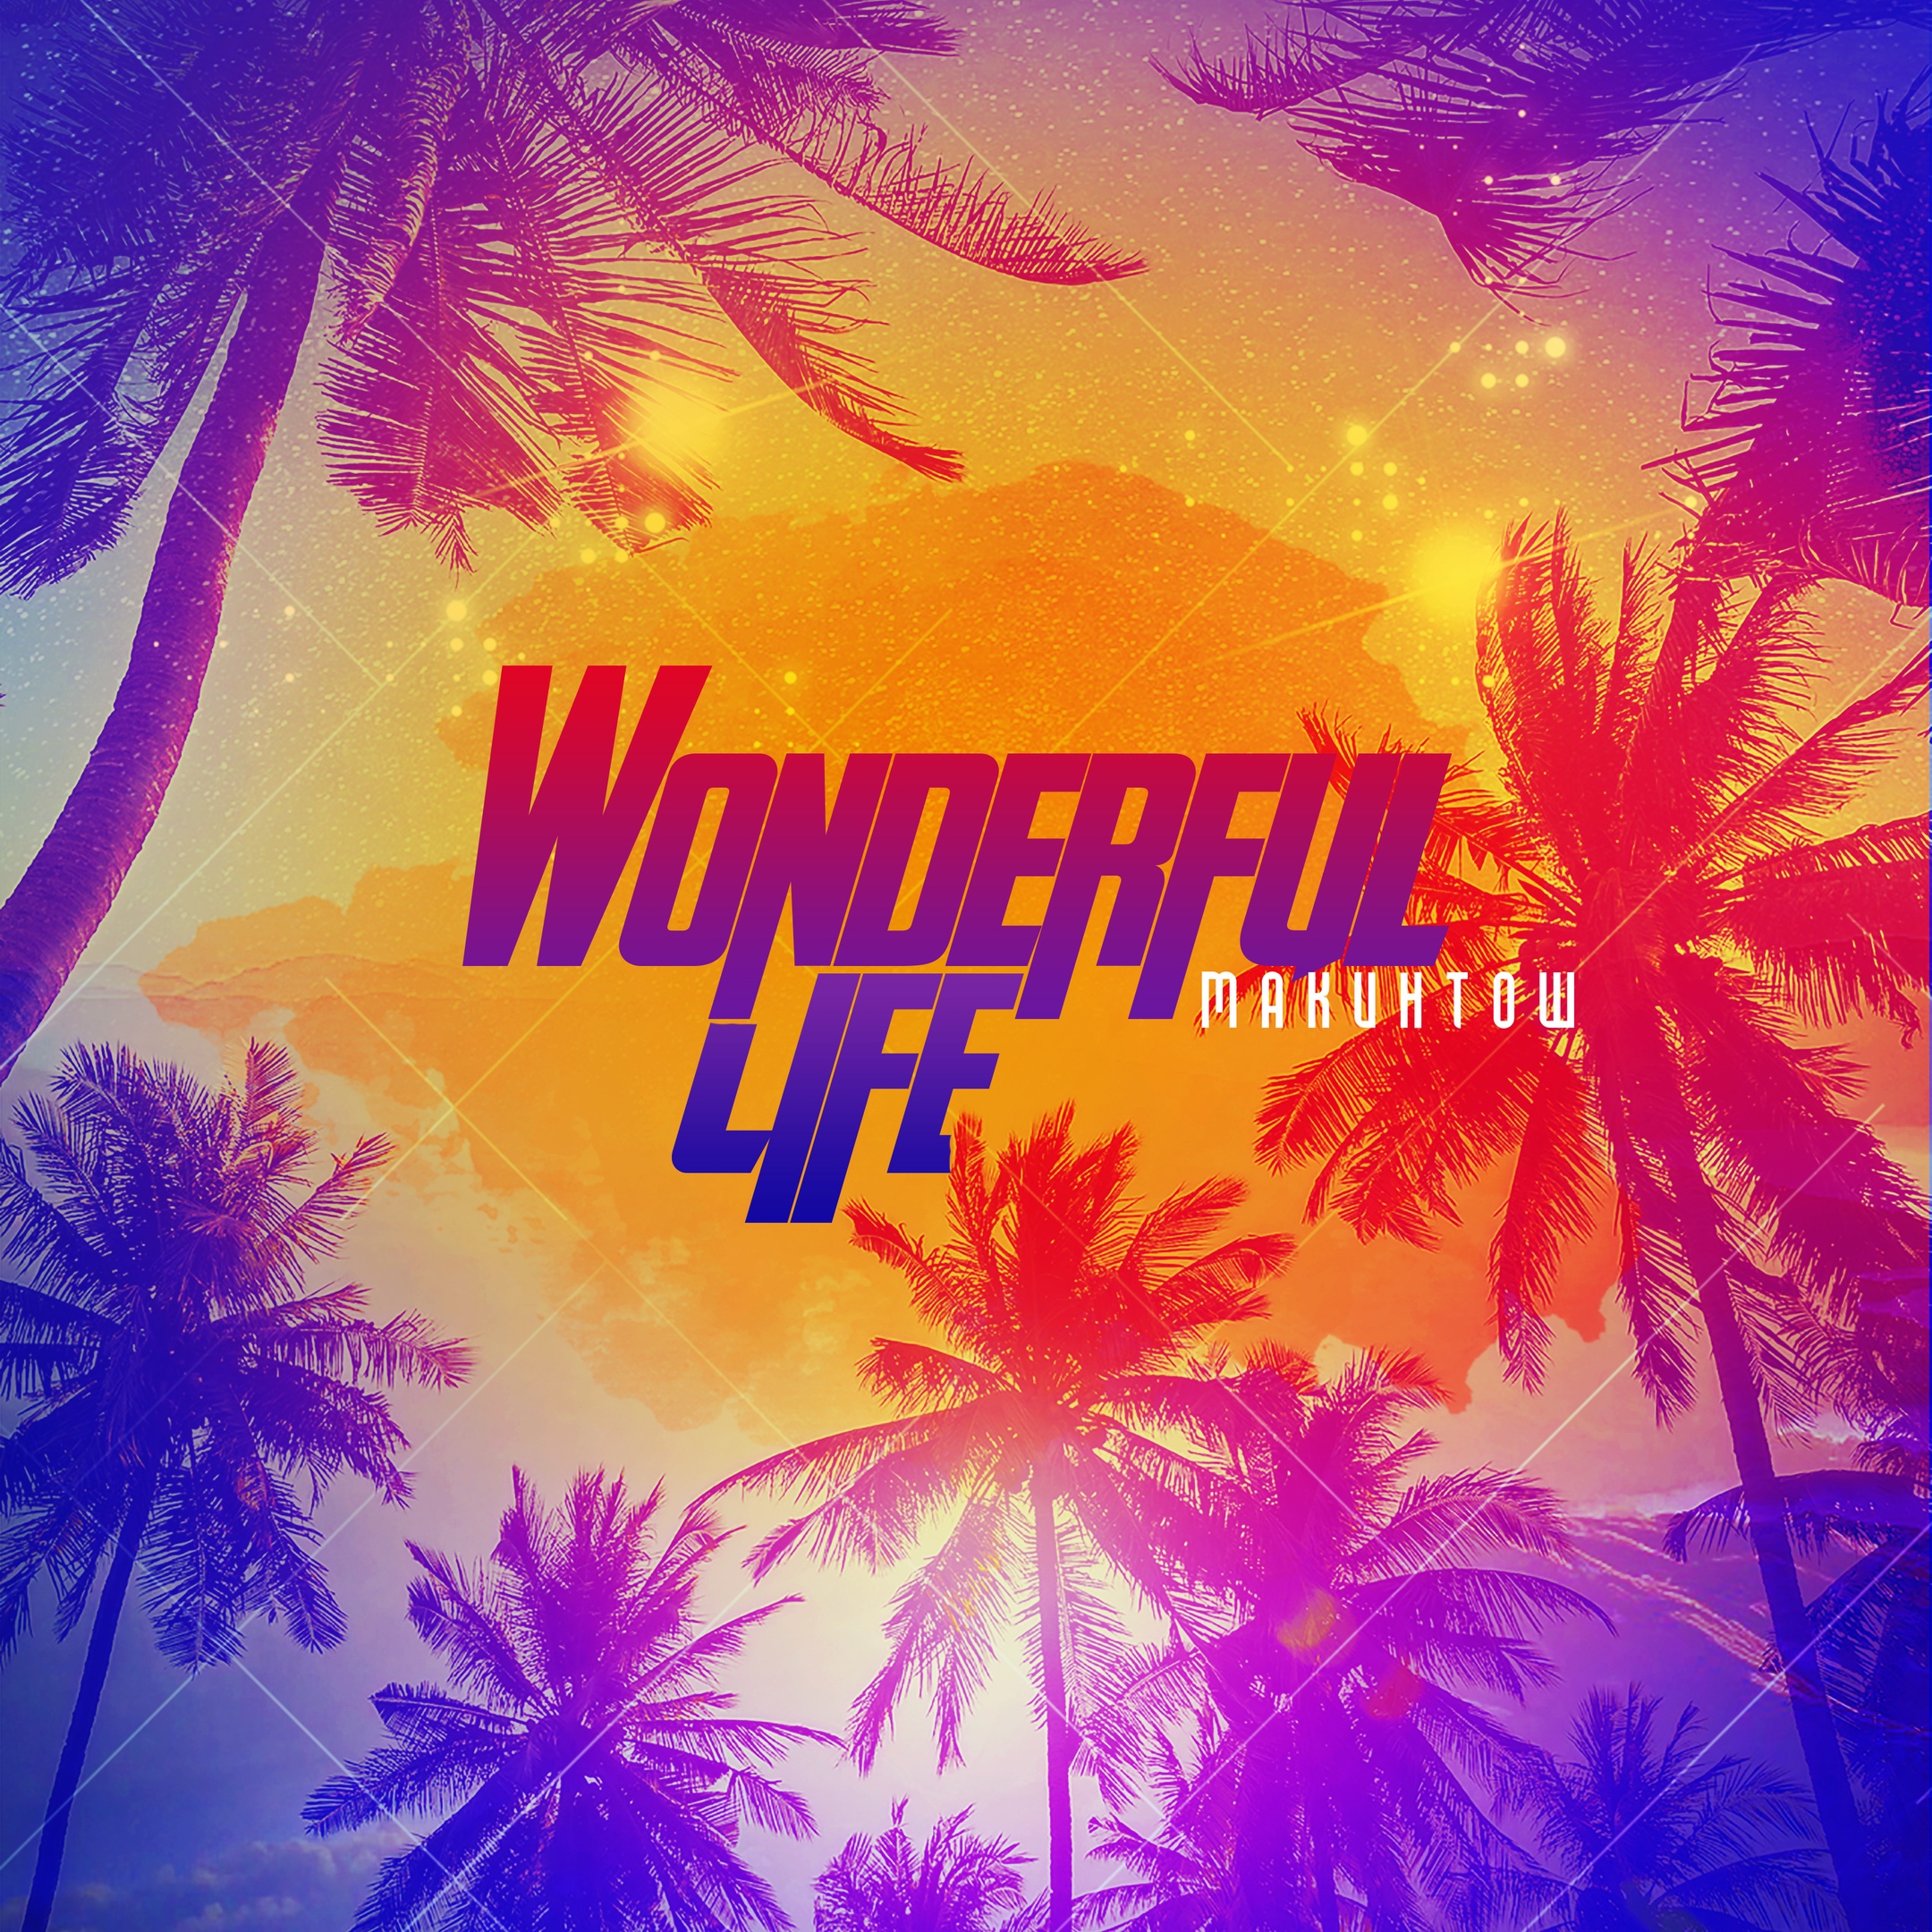 Wonderful life. Вандерфул лайф. Wonderful Life картинки. Life is wonderful album. Miracle Steve Modana.